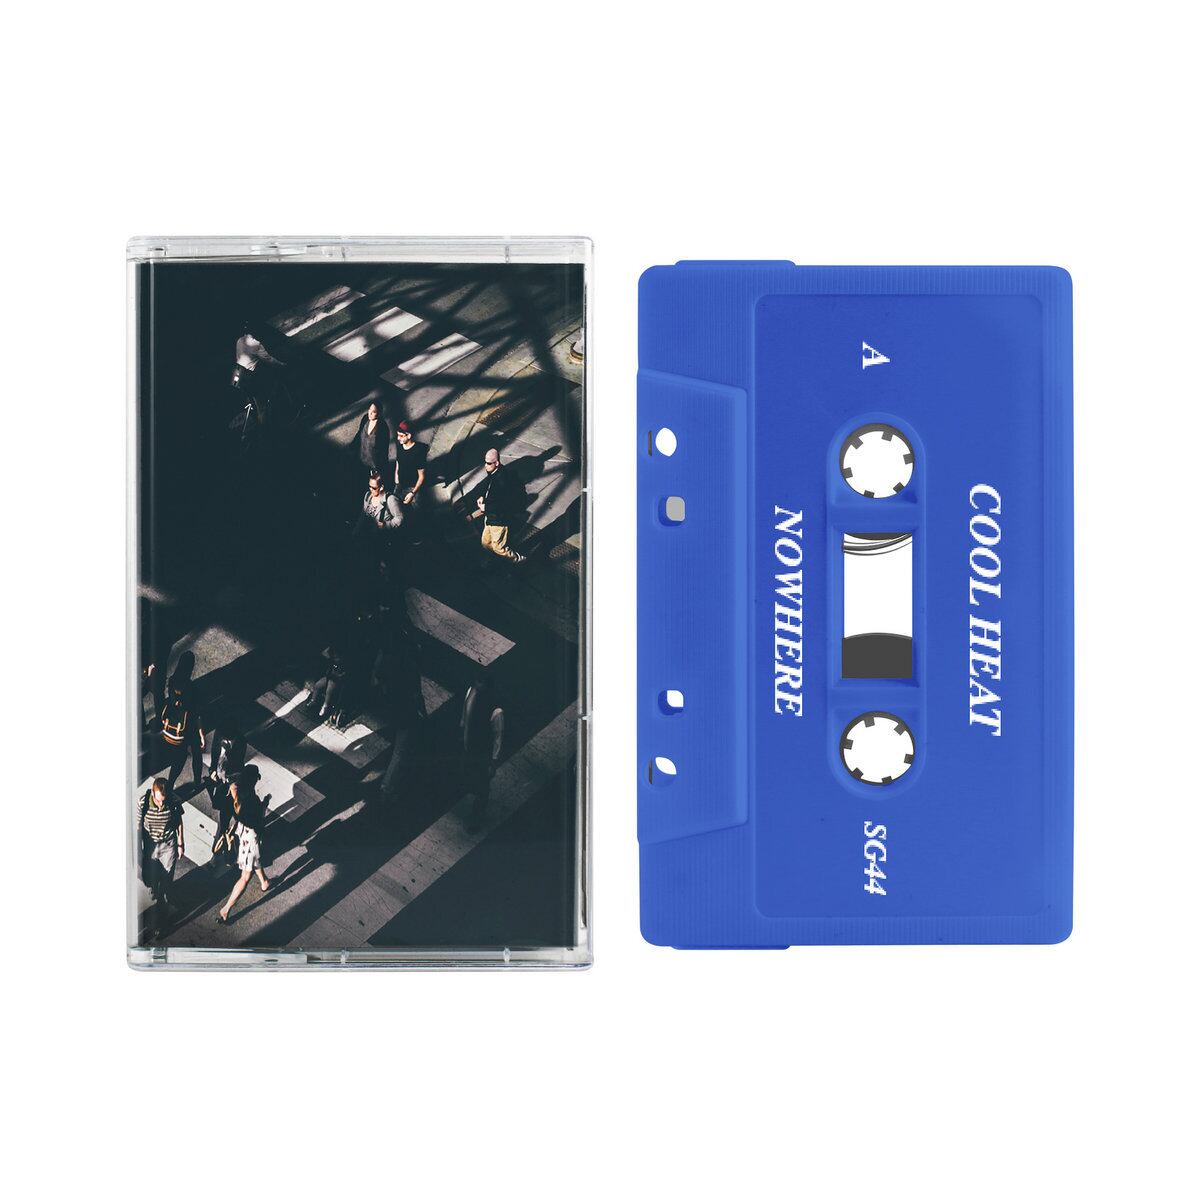 COOL HEAT / Nowhere（300 Ltd Cassette）